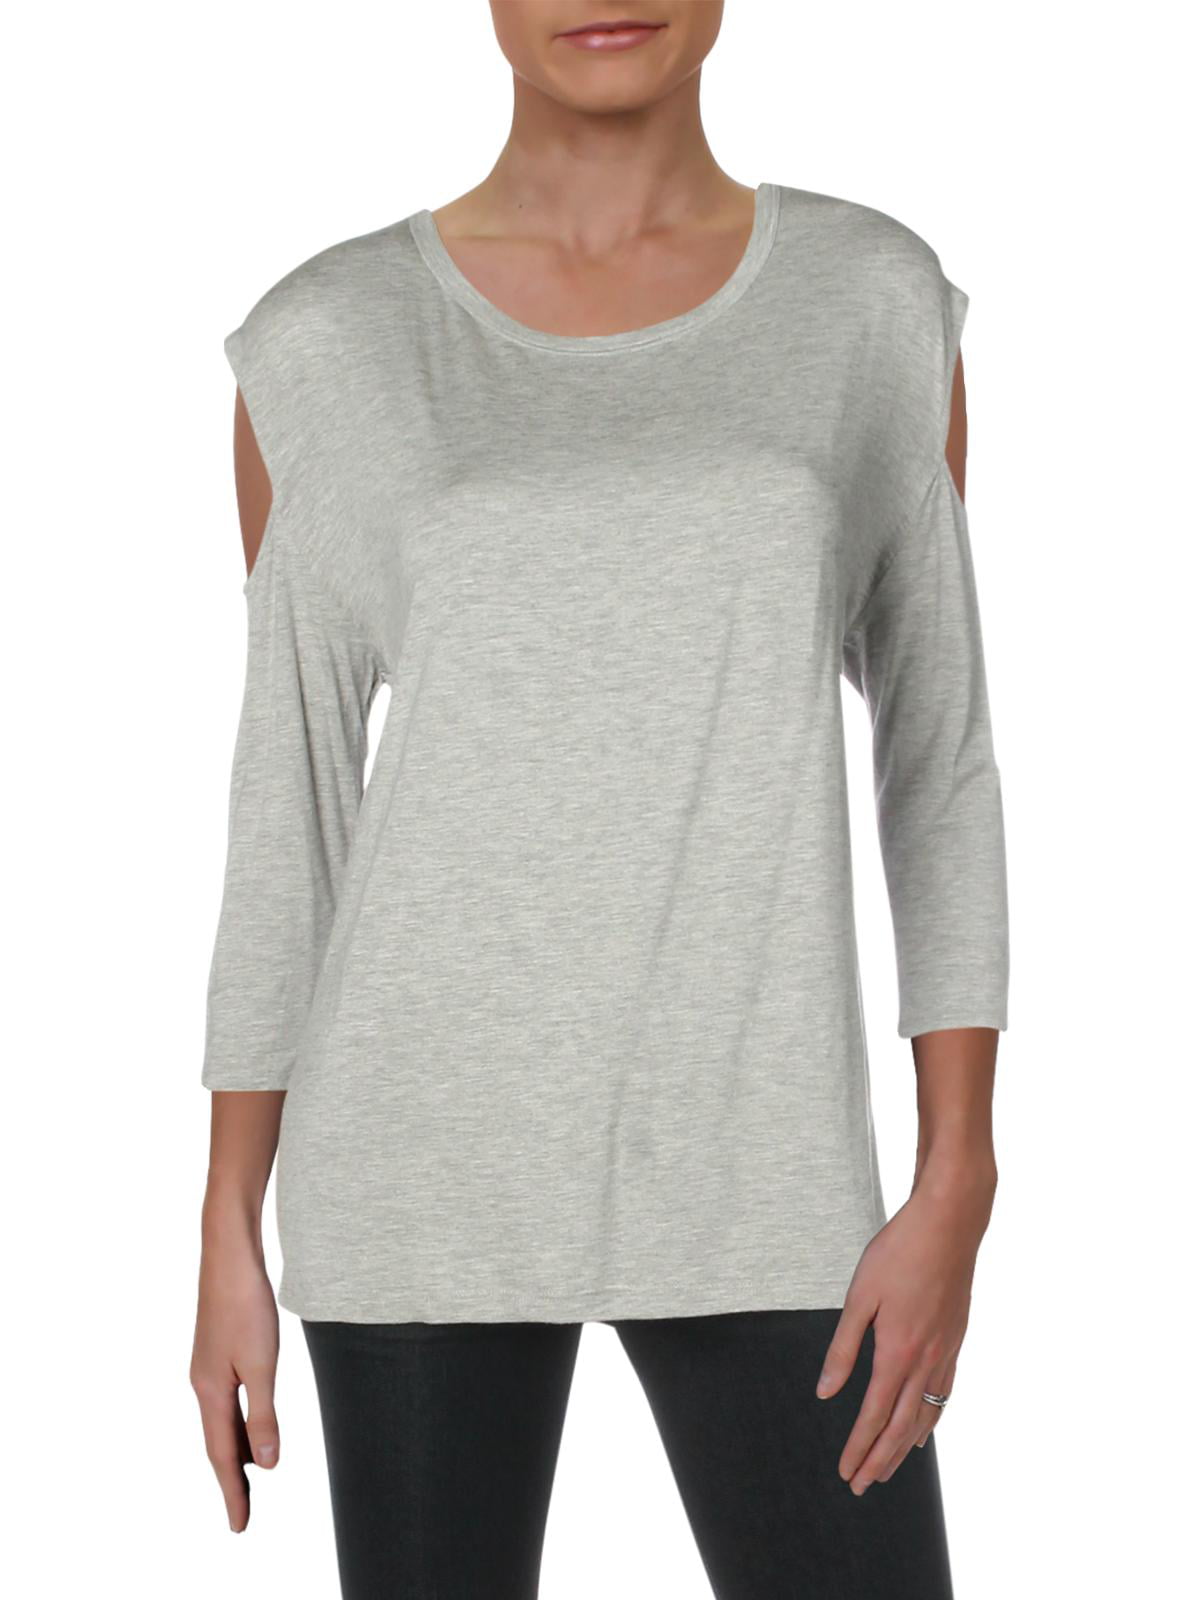 WOMEN FASHION Shirts & T-shirts Lace Zara blouse discount 95% White M 